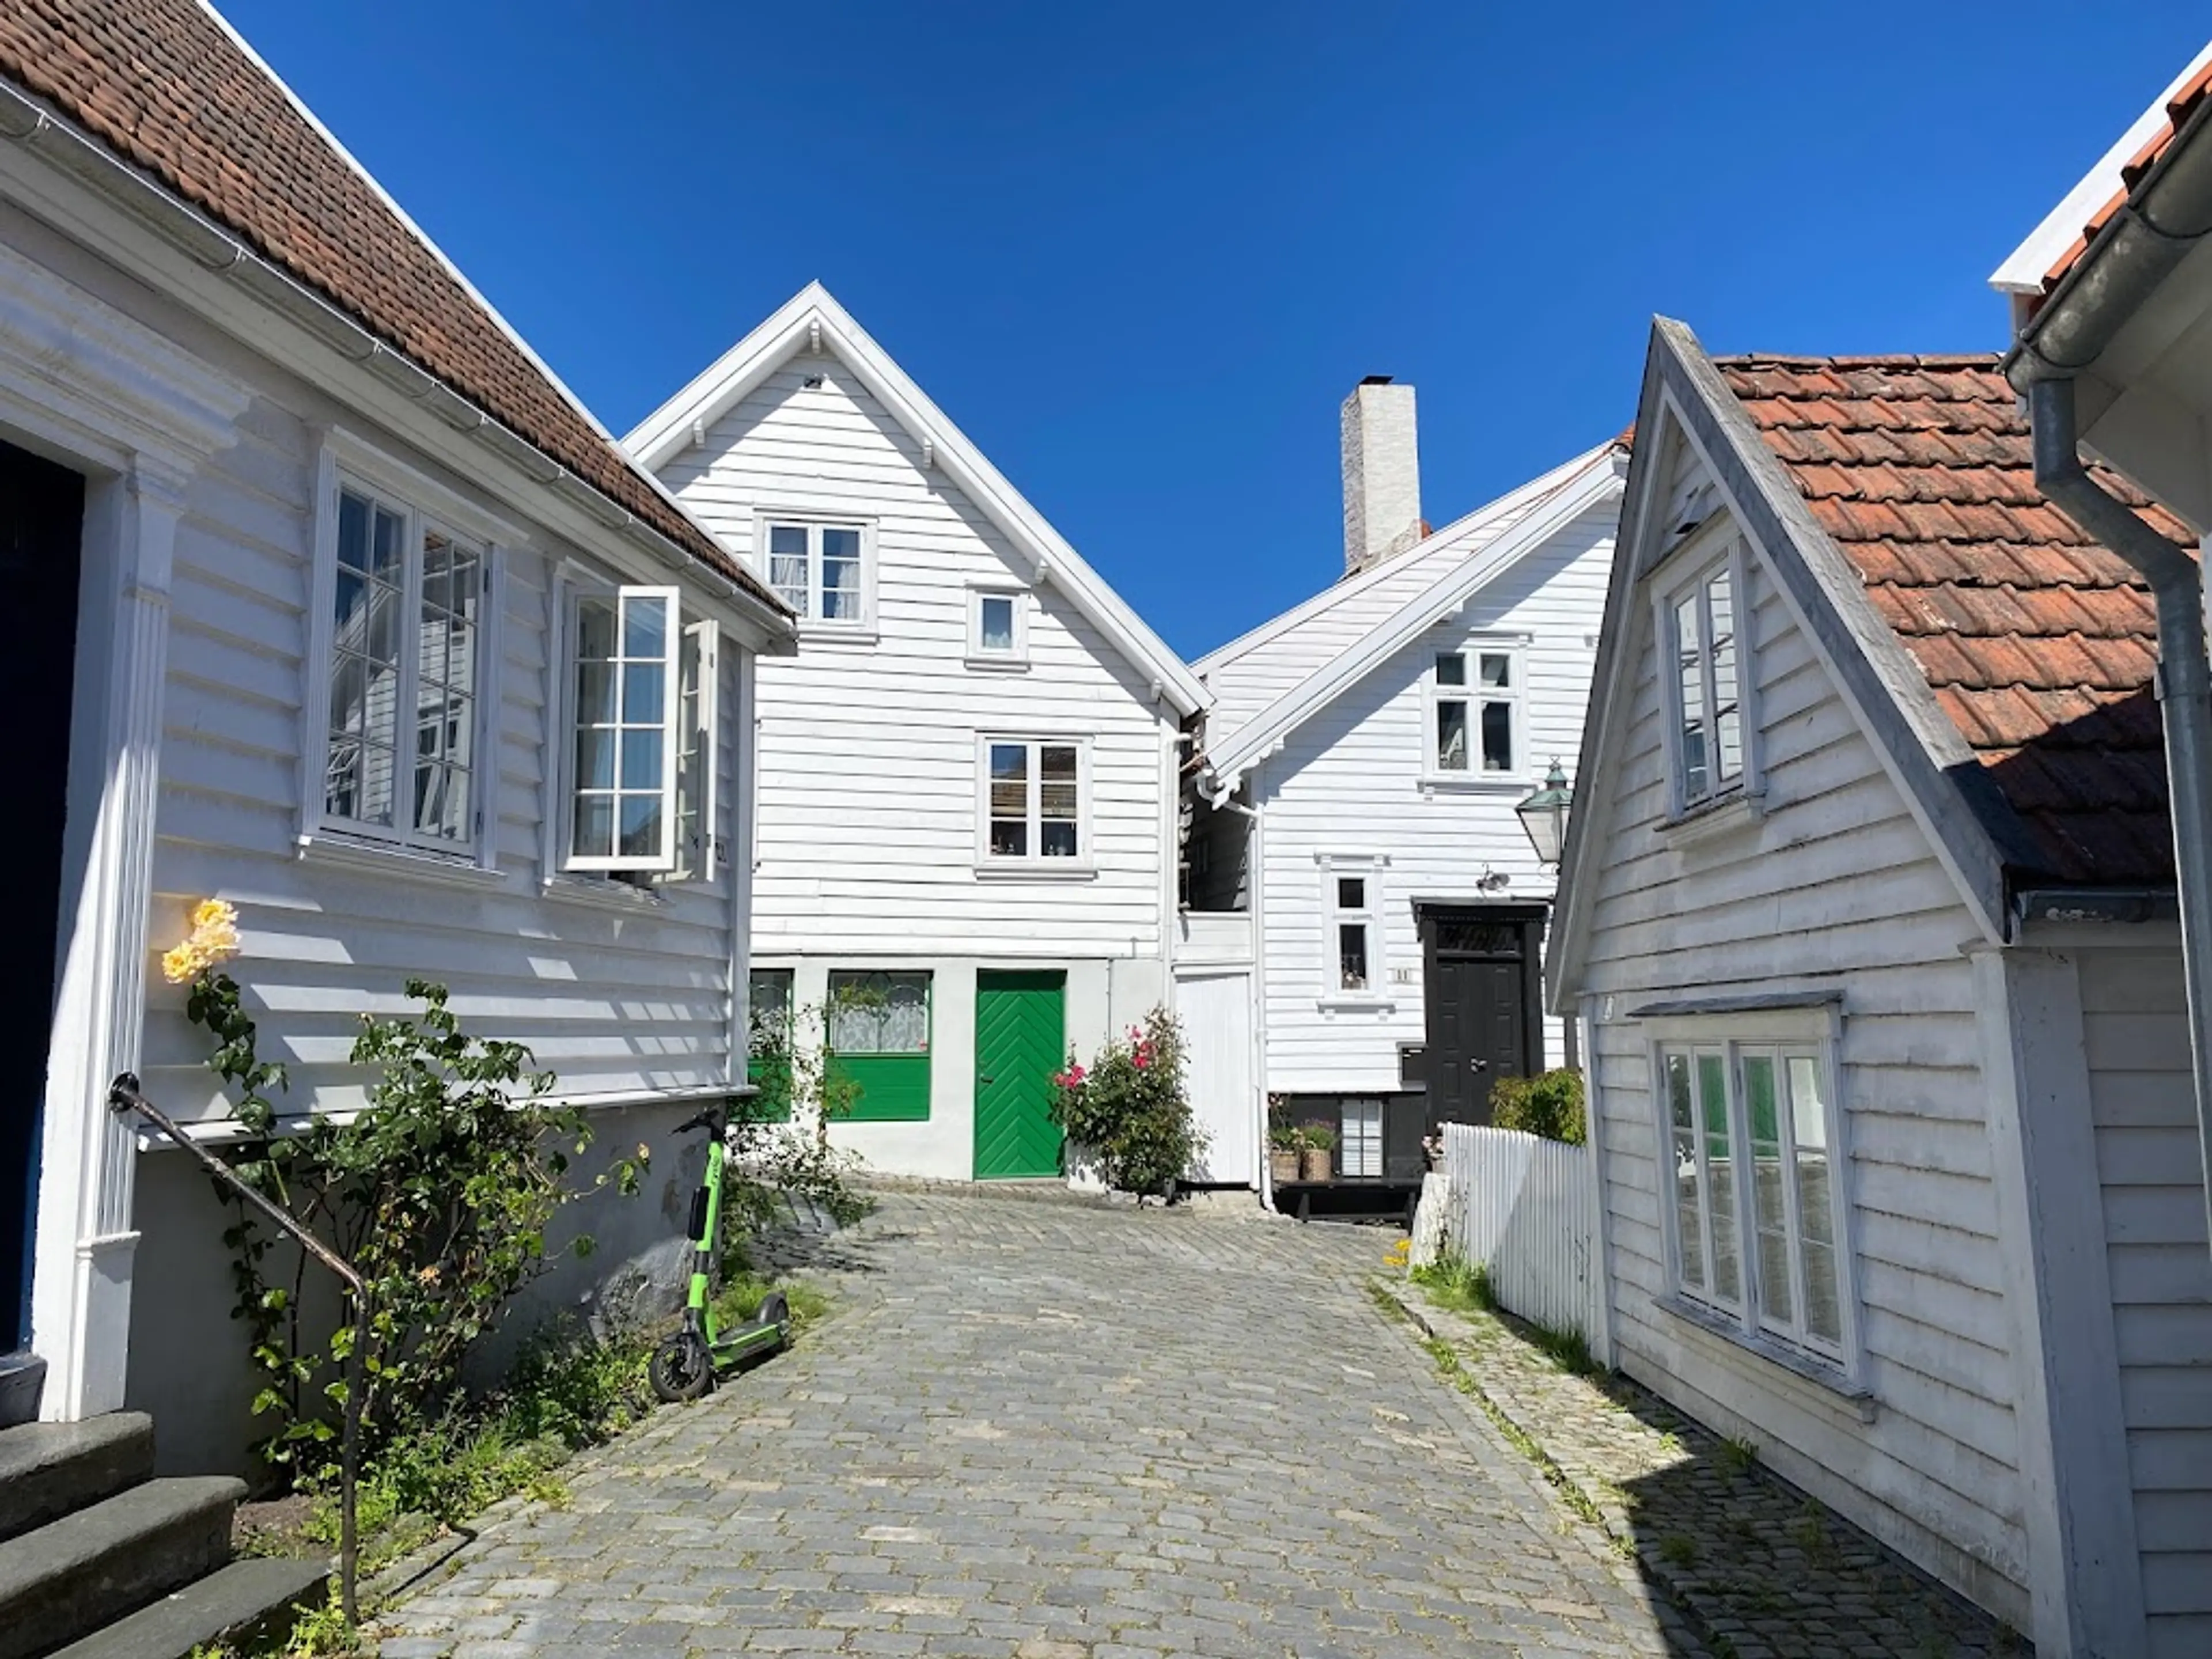 Stavanger's Old Town